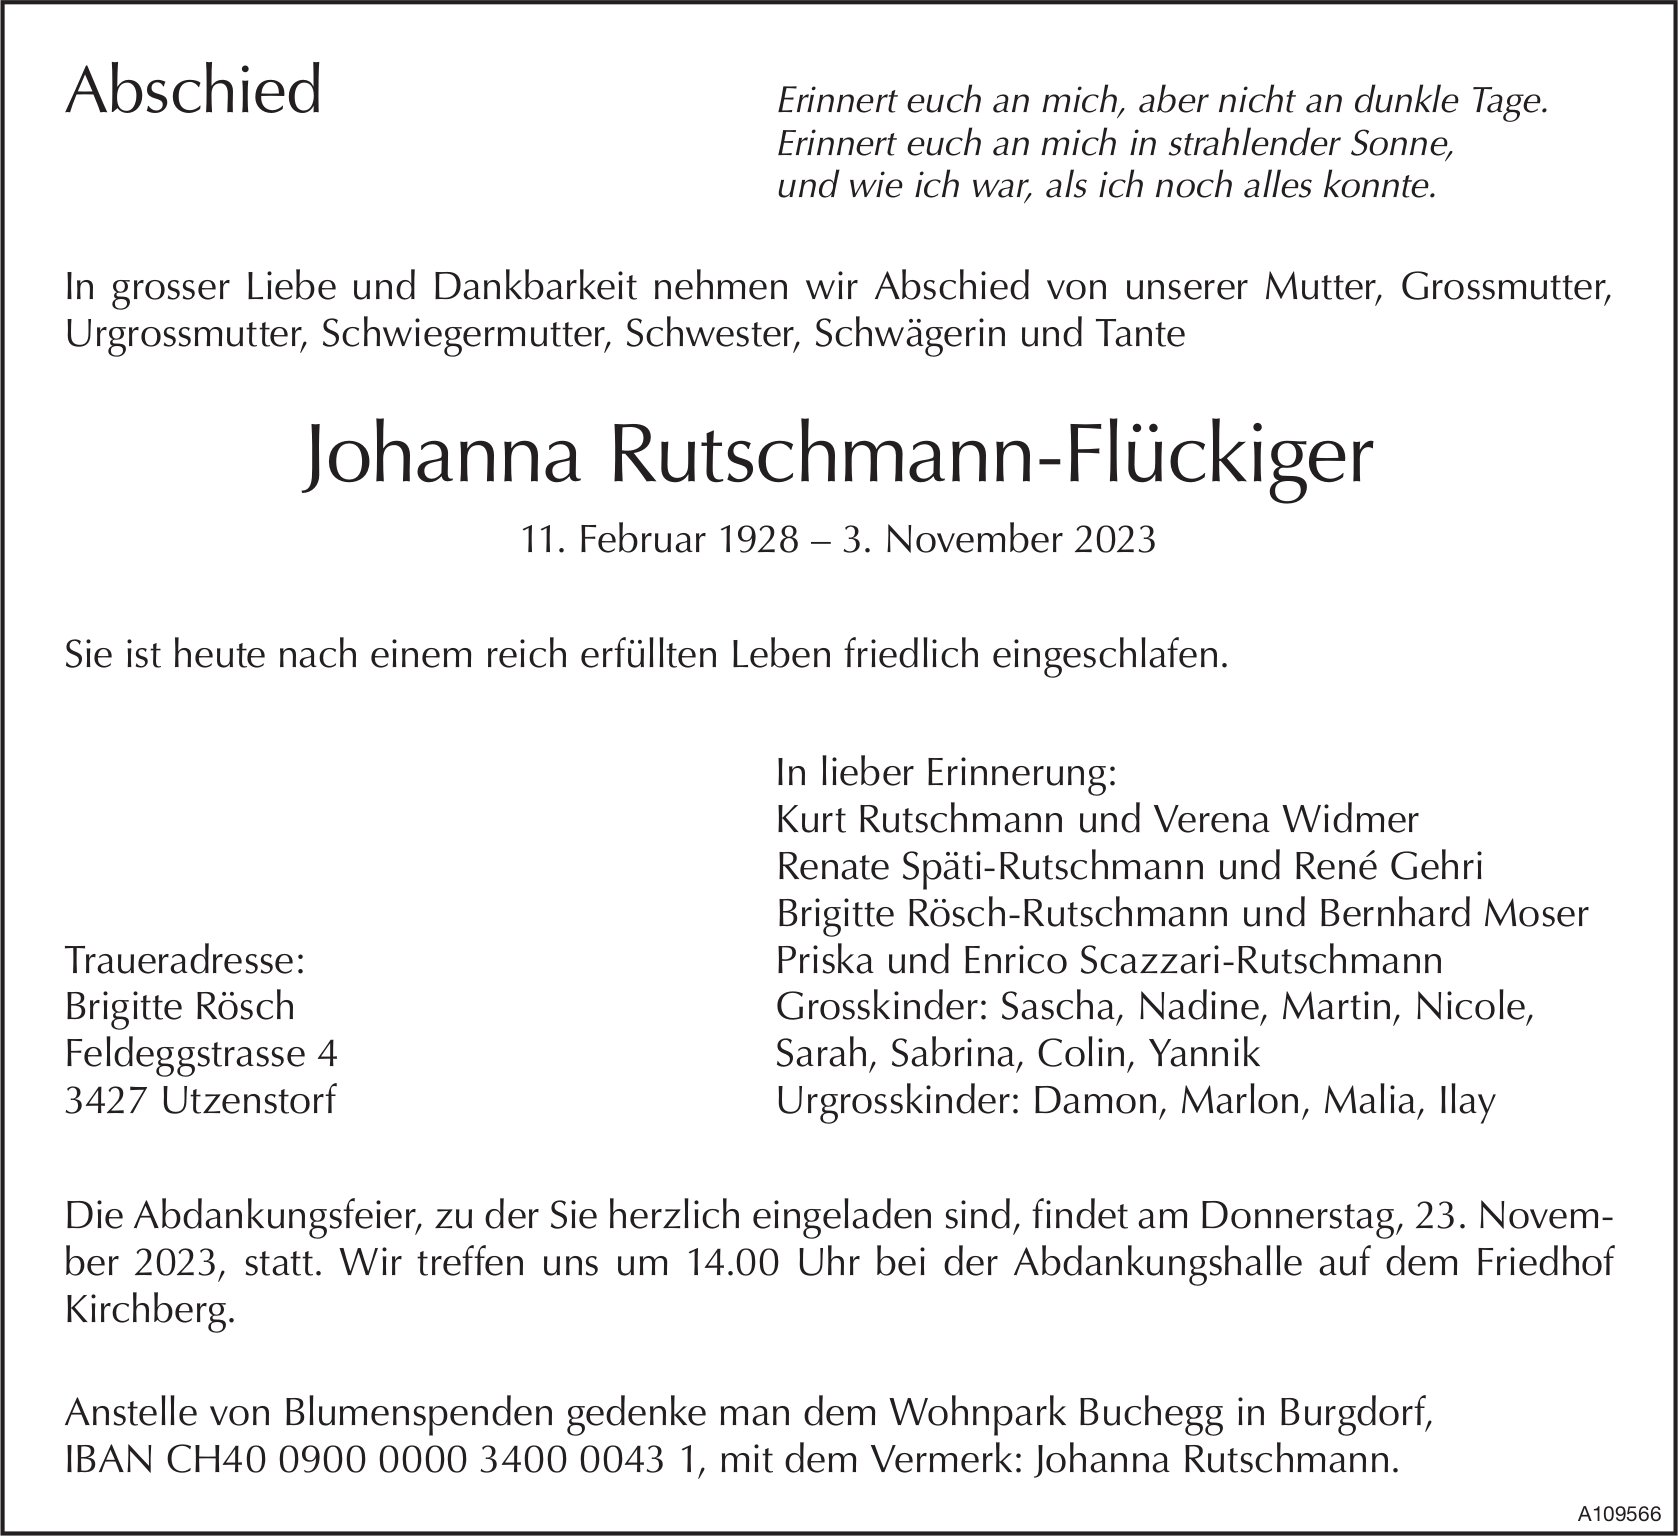 Johanna Rutschmann-Flückiger, November 2023 / TA